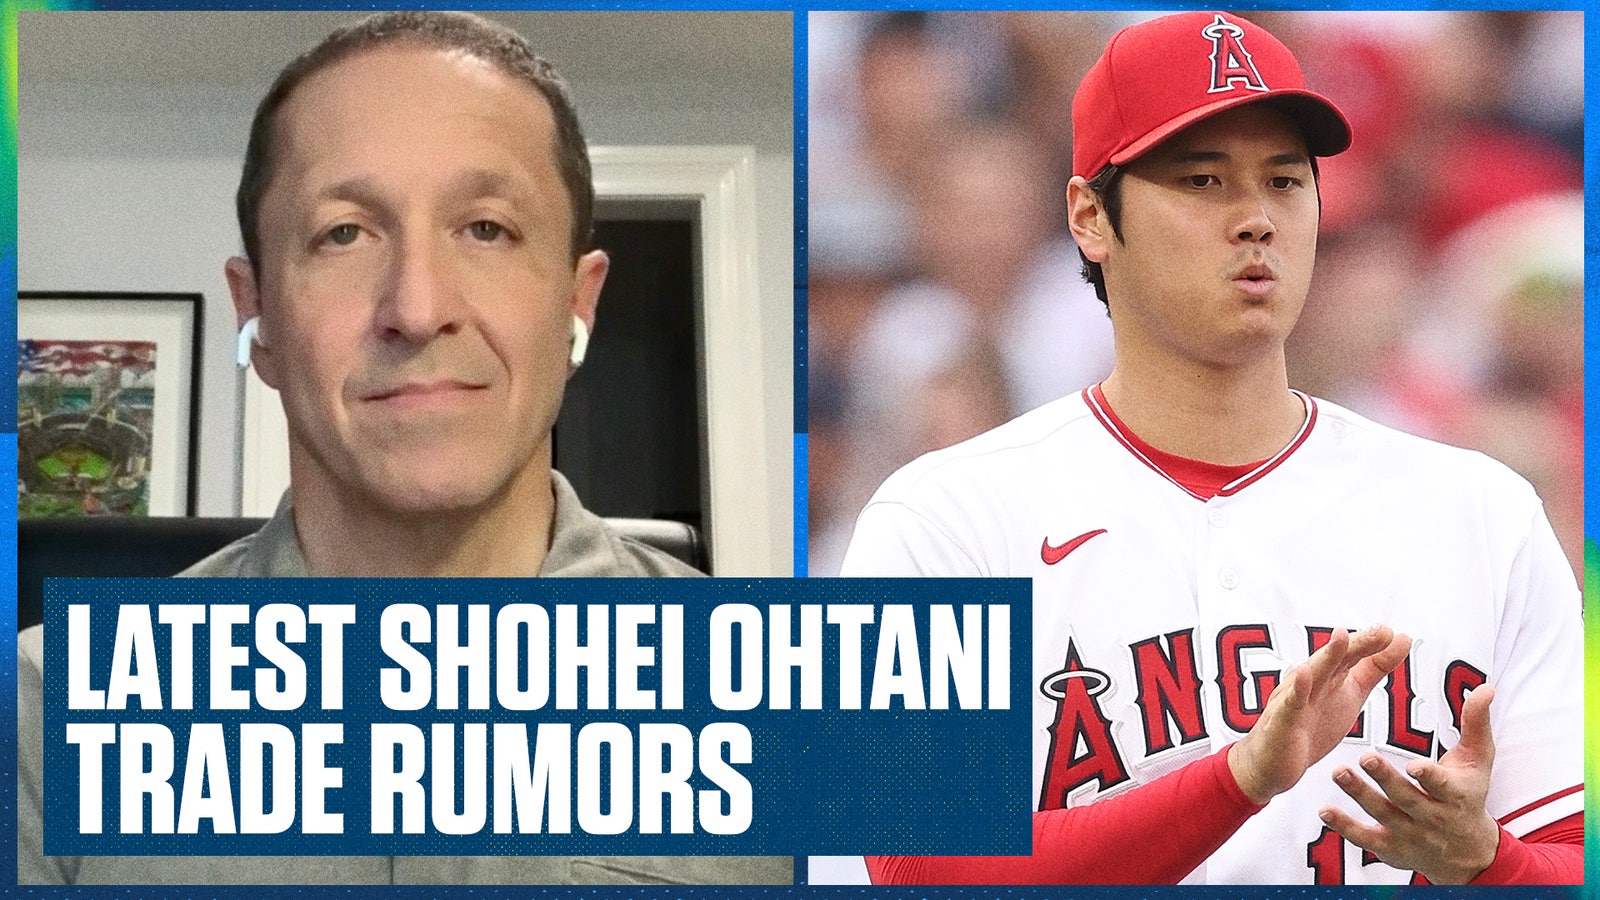 Ken Rosenthal lays out the latest Shohei Ohtani trade deadline rumors